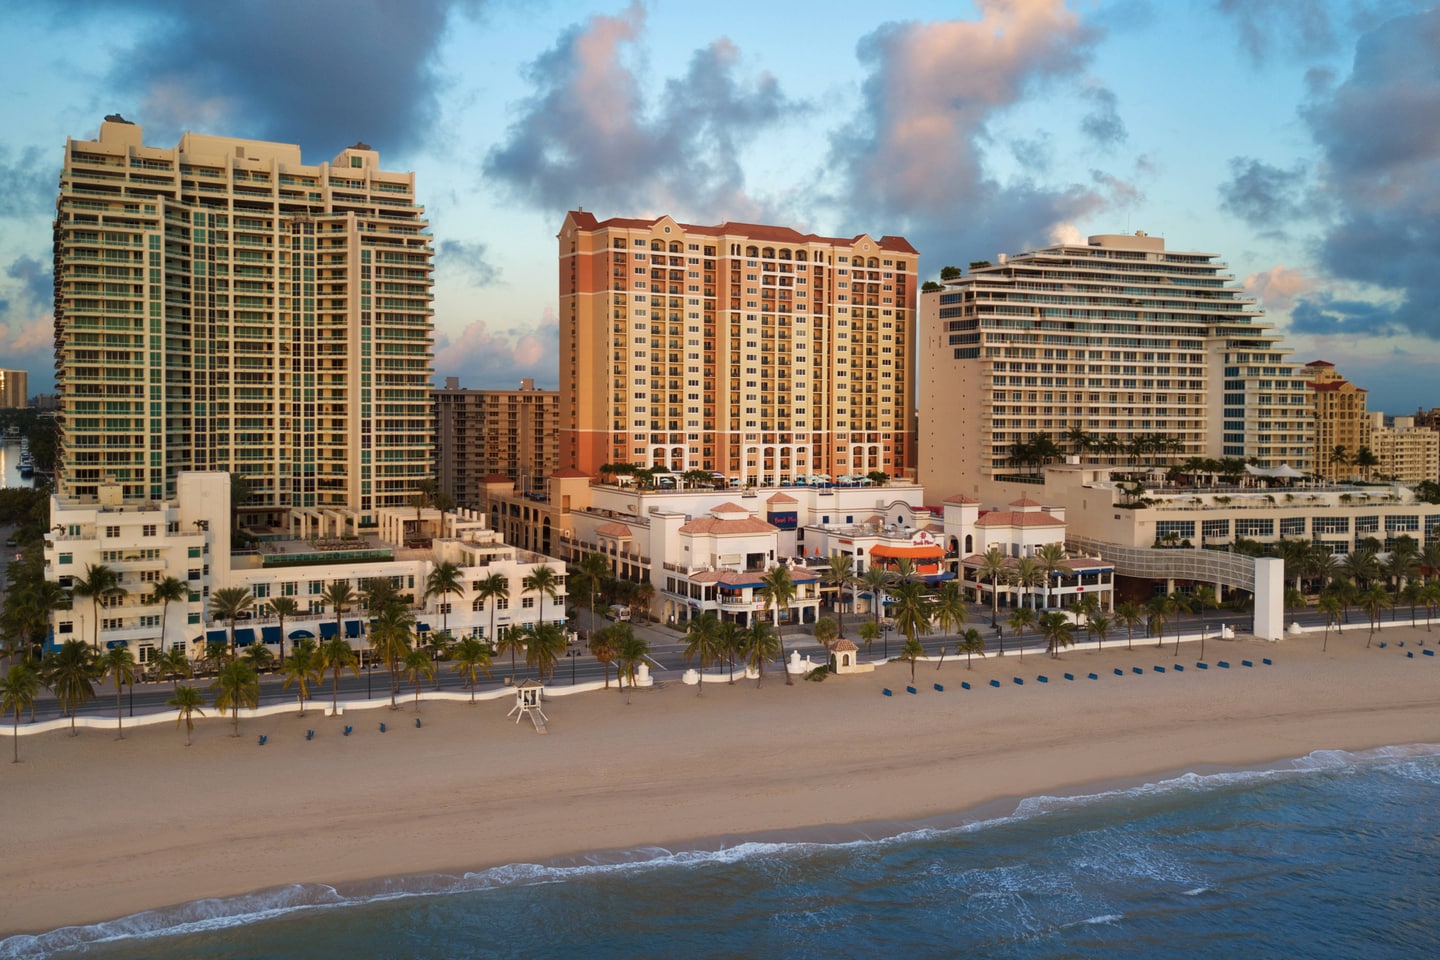 Best Marriott Beach Hotels & Resorts in Florida For Your Marriott Free Night Certificates